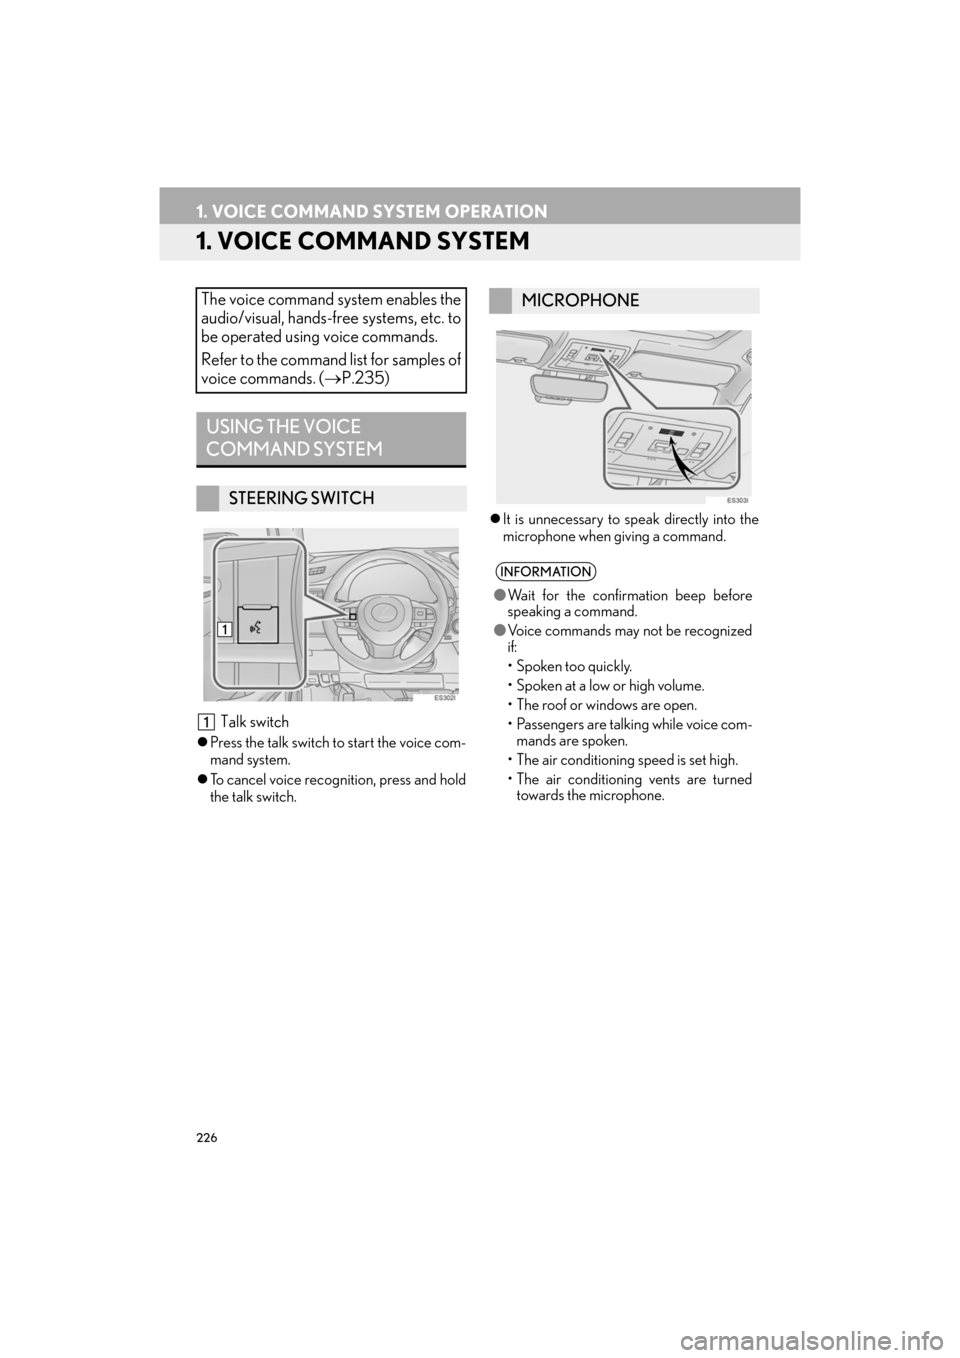 Lexus ES300h 2017  Navigation Manual 226
ES350/300h_Navi_OM33C79U_(U)16.06.22     14:52
1. VOICE COMMAND SYSTEM OPERATION
1. VOICE COMMAND SYSTEM
 Talk switch
�zPress the talk switch to start the voice com-
mand system.
�z To cancel voic